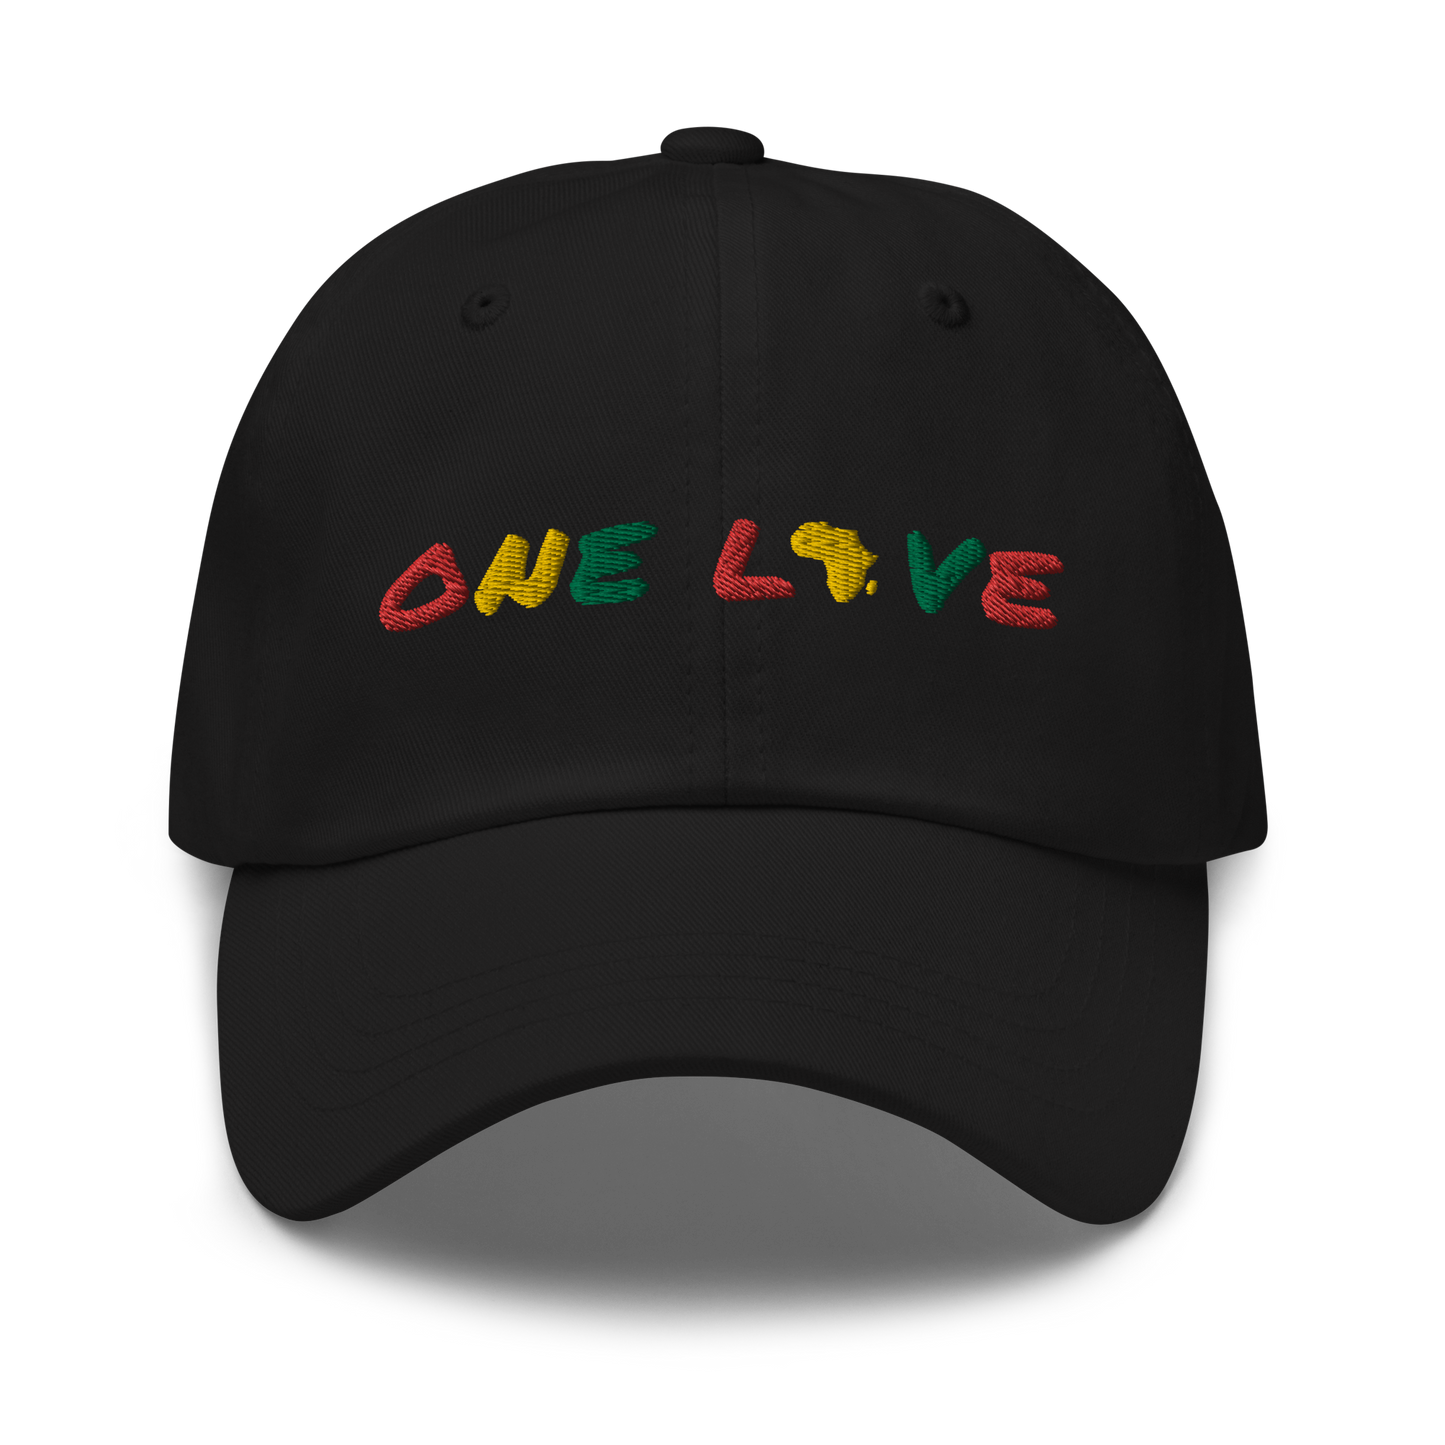 One Love Dad hat